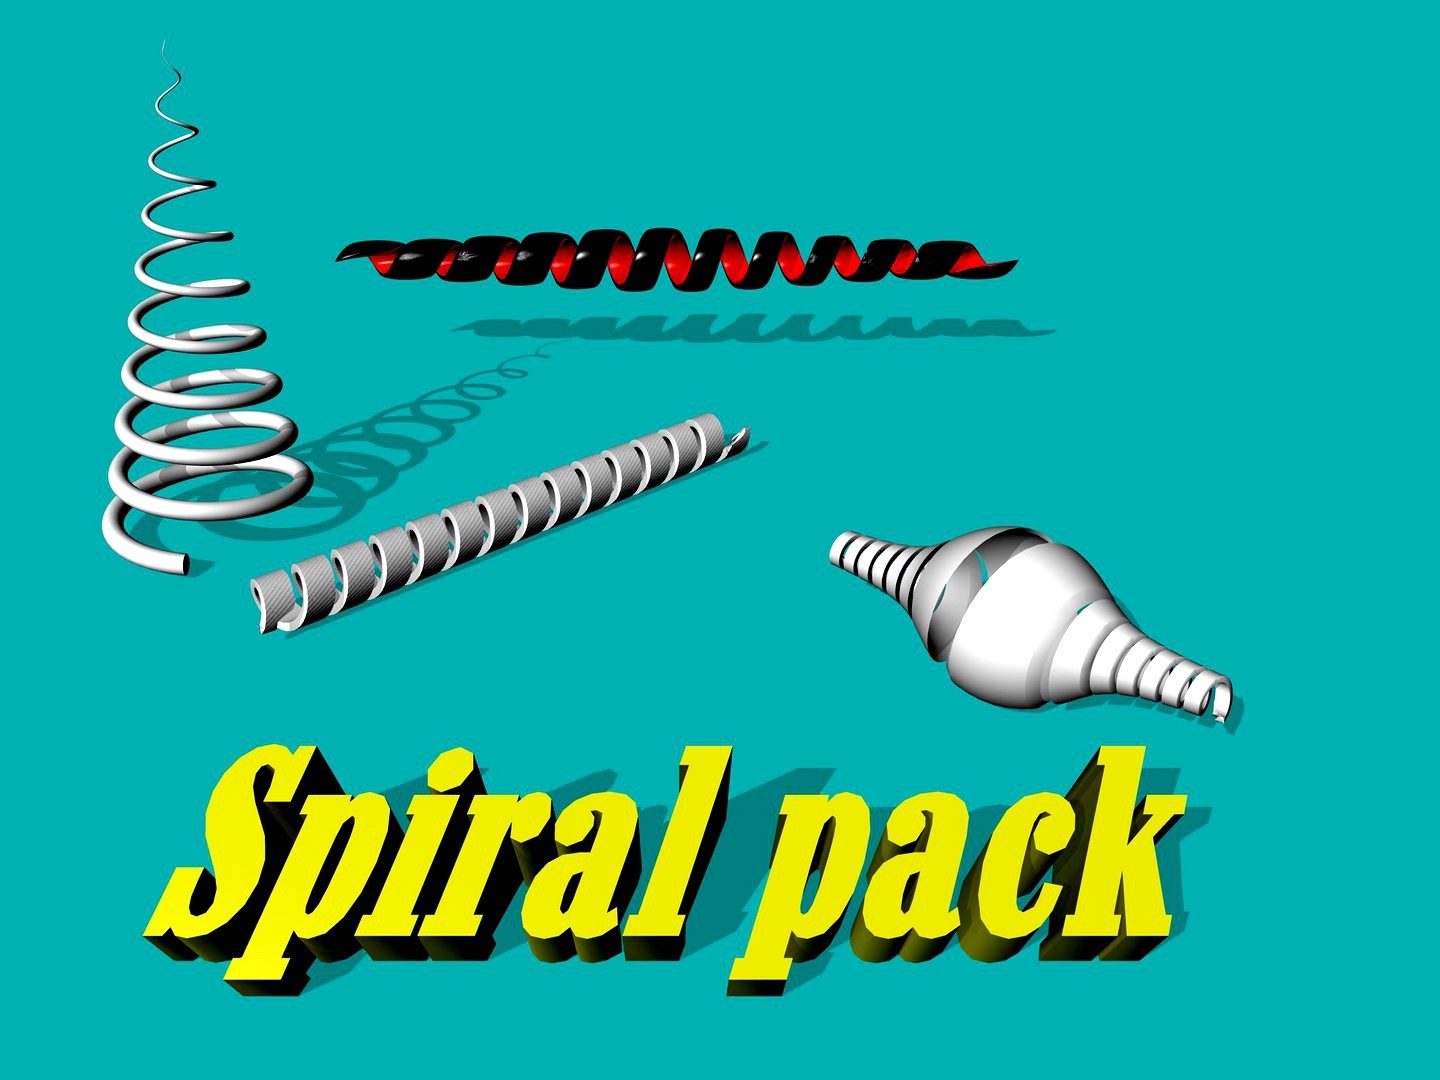 Spiral pack